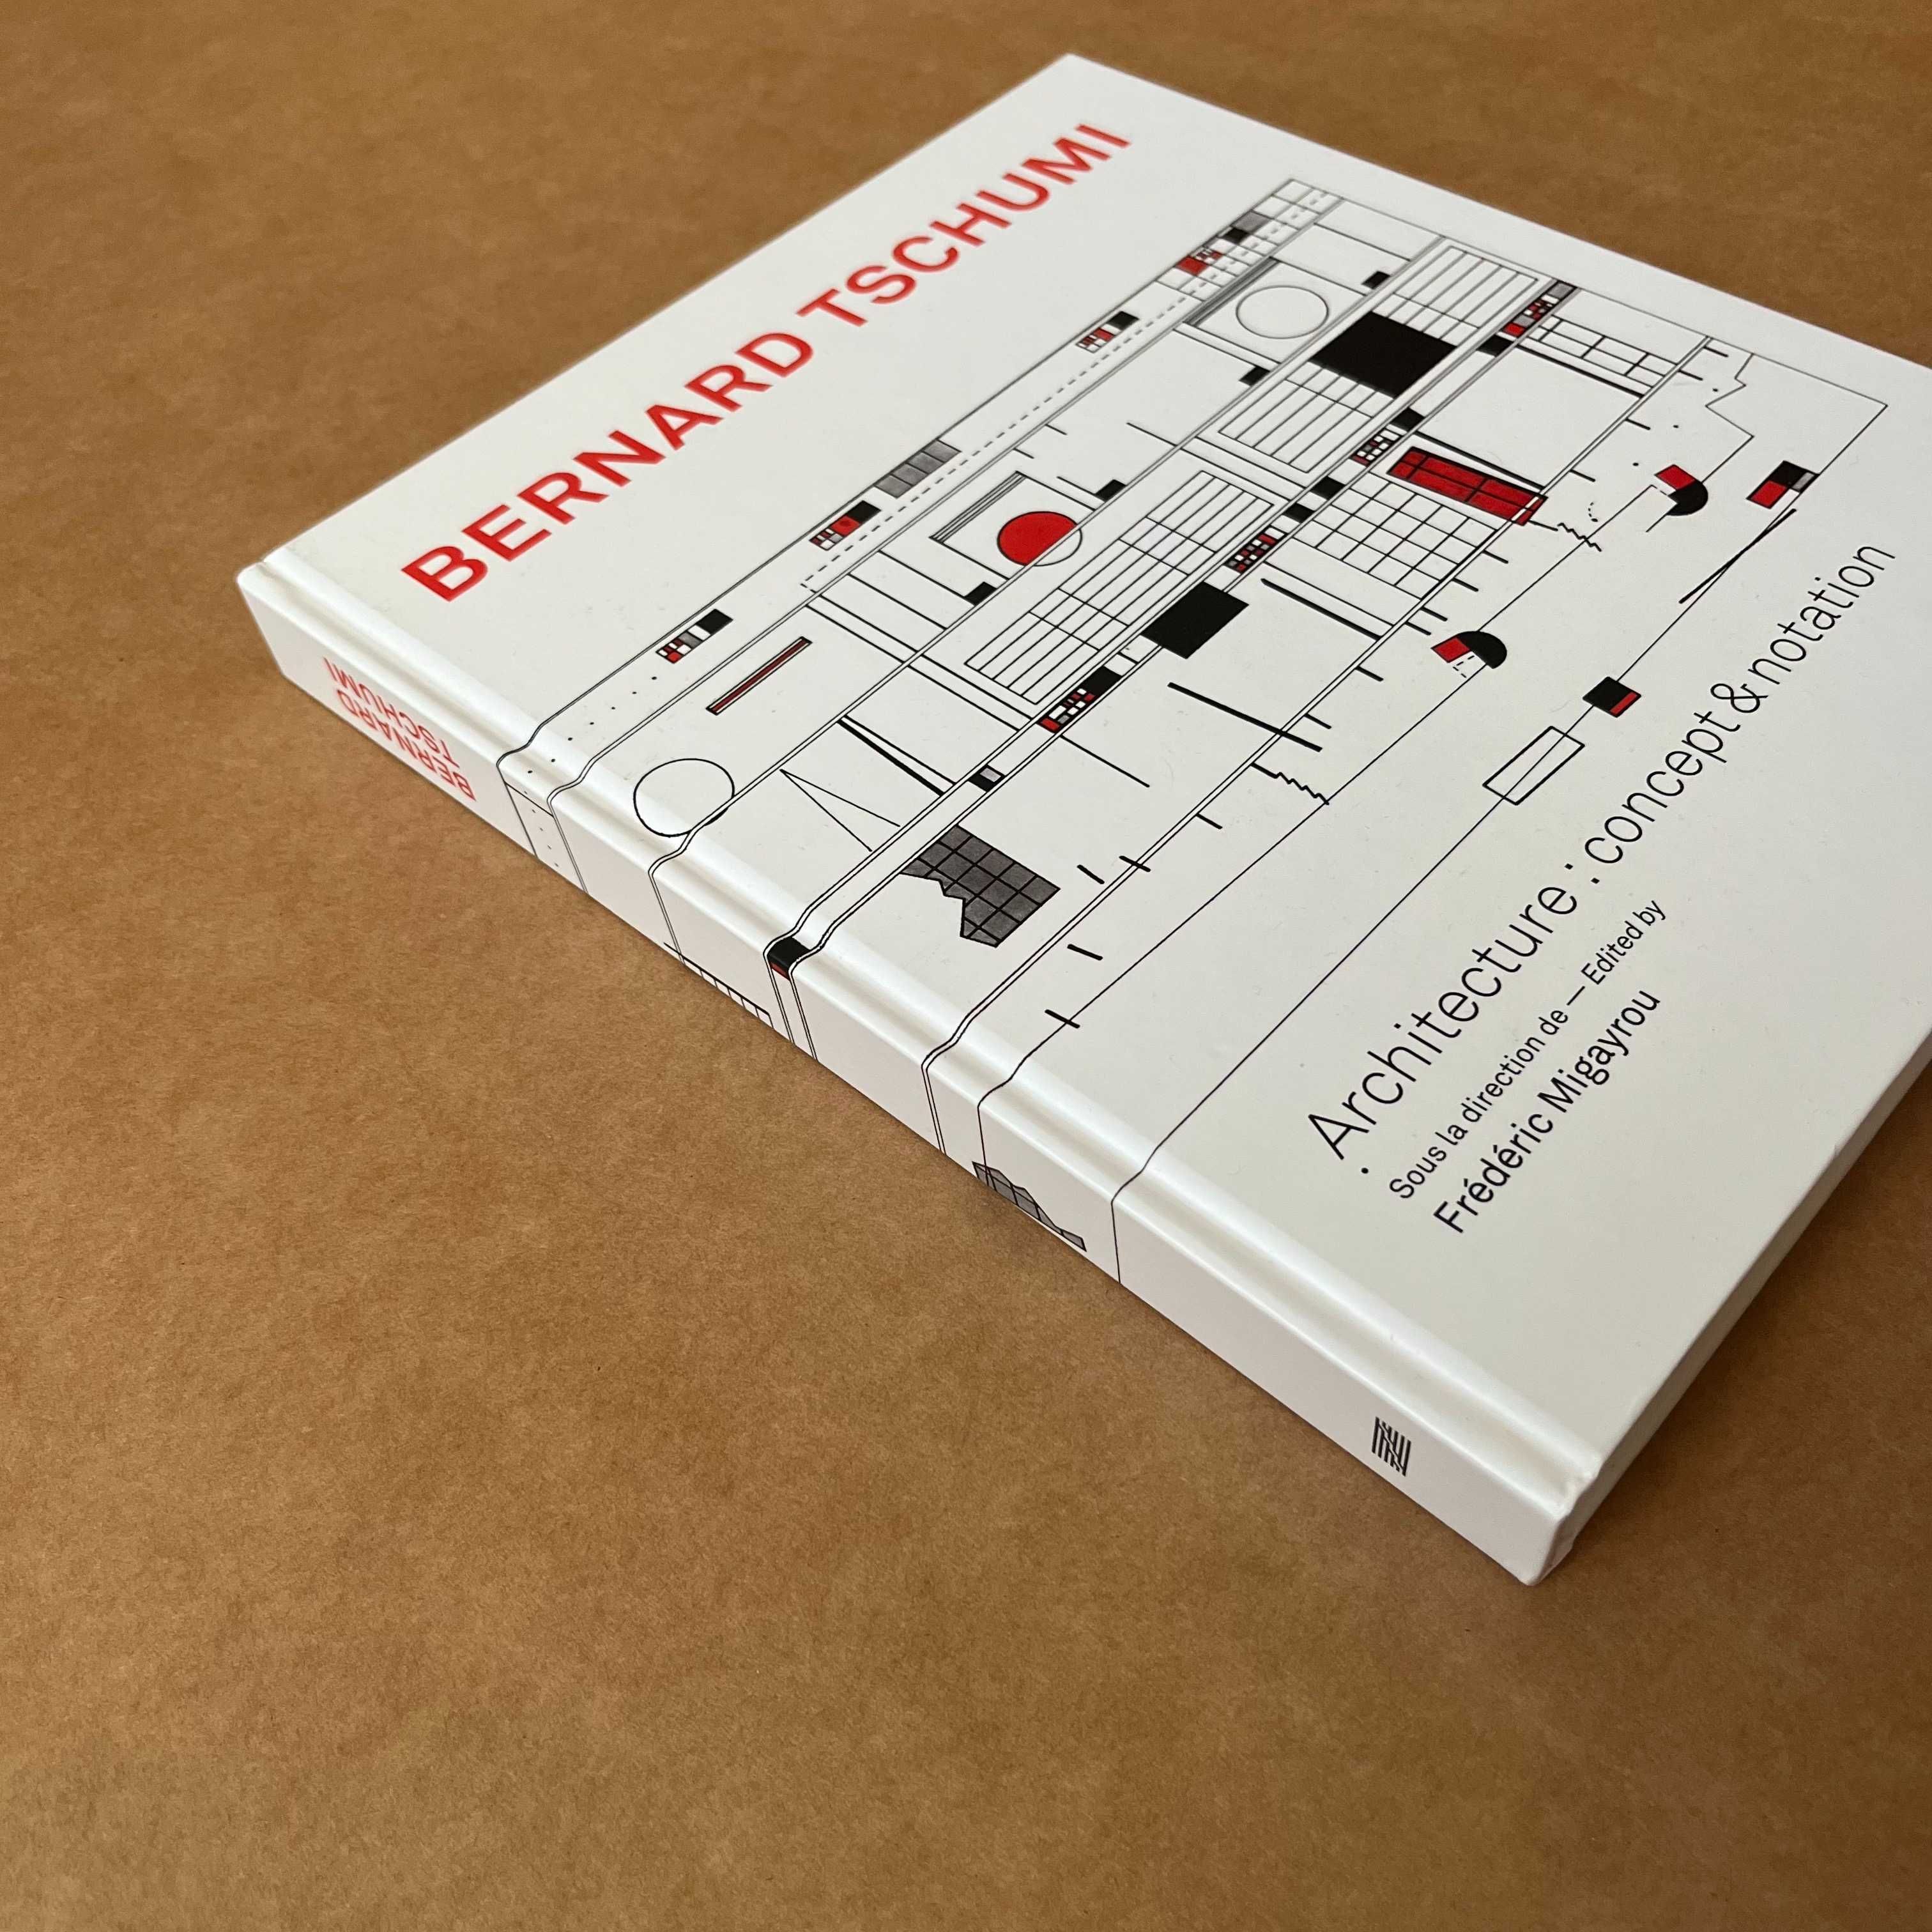 Bernard Tschumi - Monografia de arquitectura